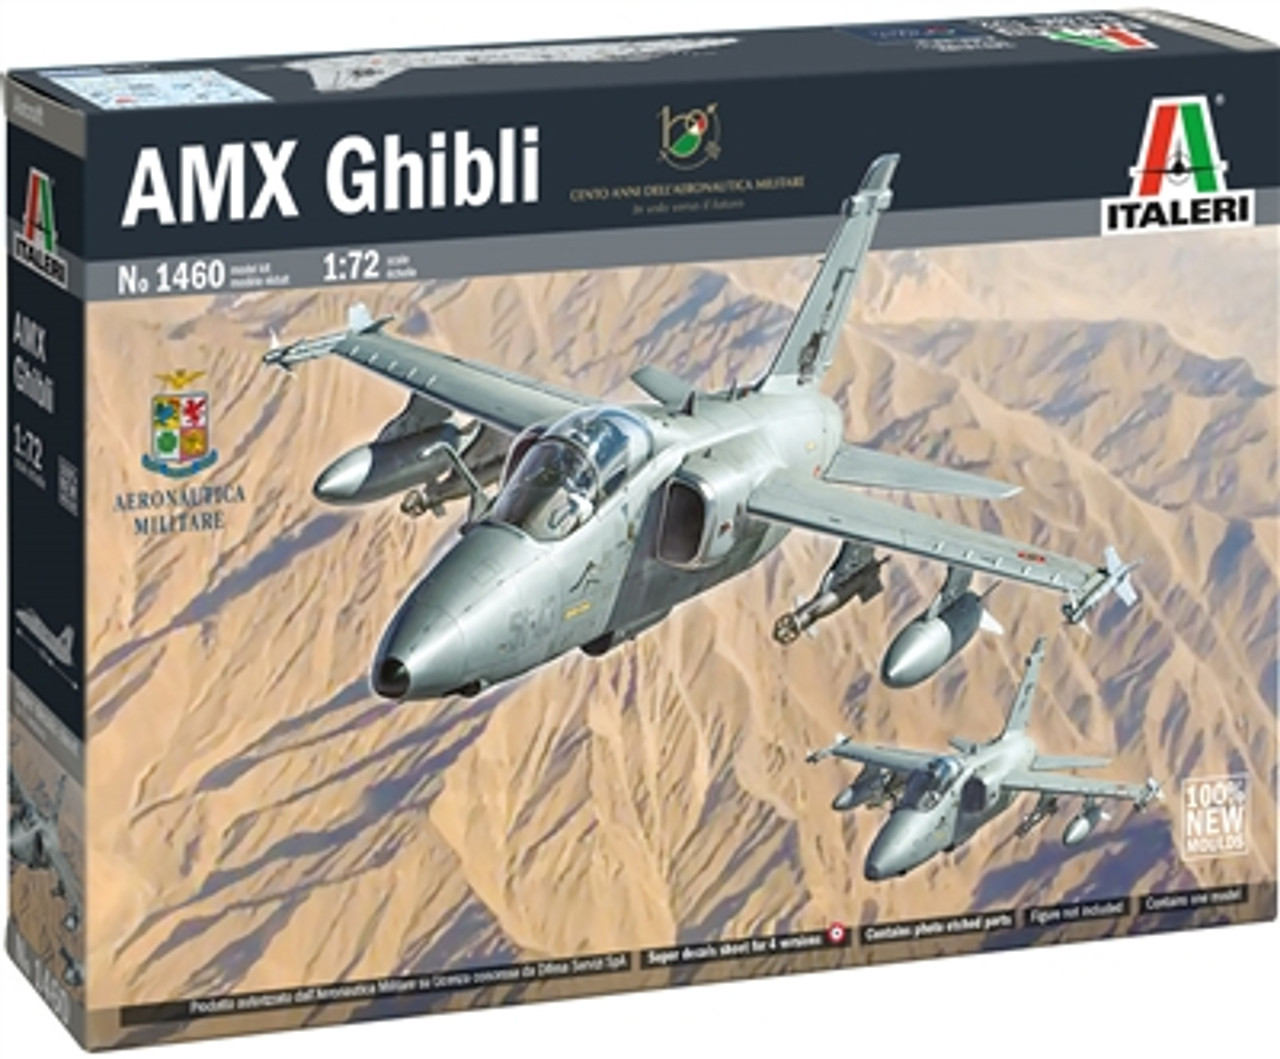 Italeri 1460 1/72 AMX Ghibli Plastic Model Kit